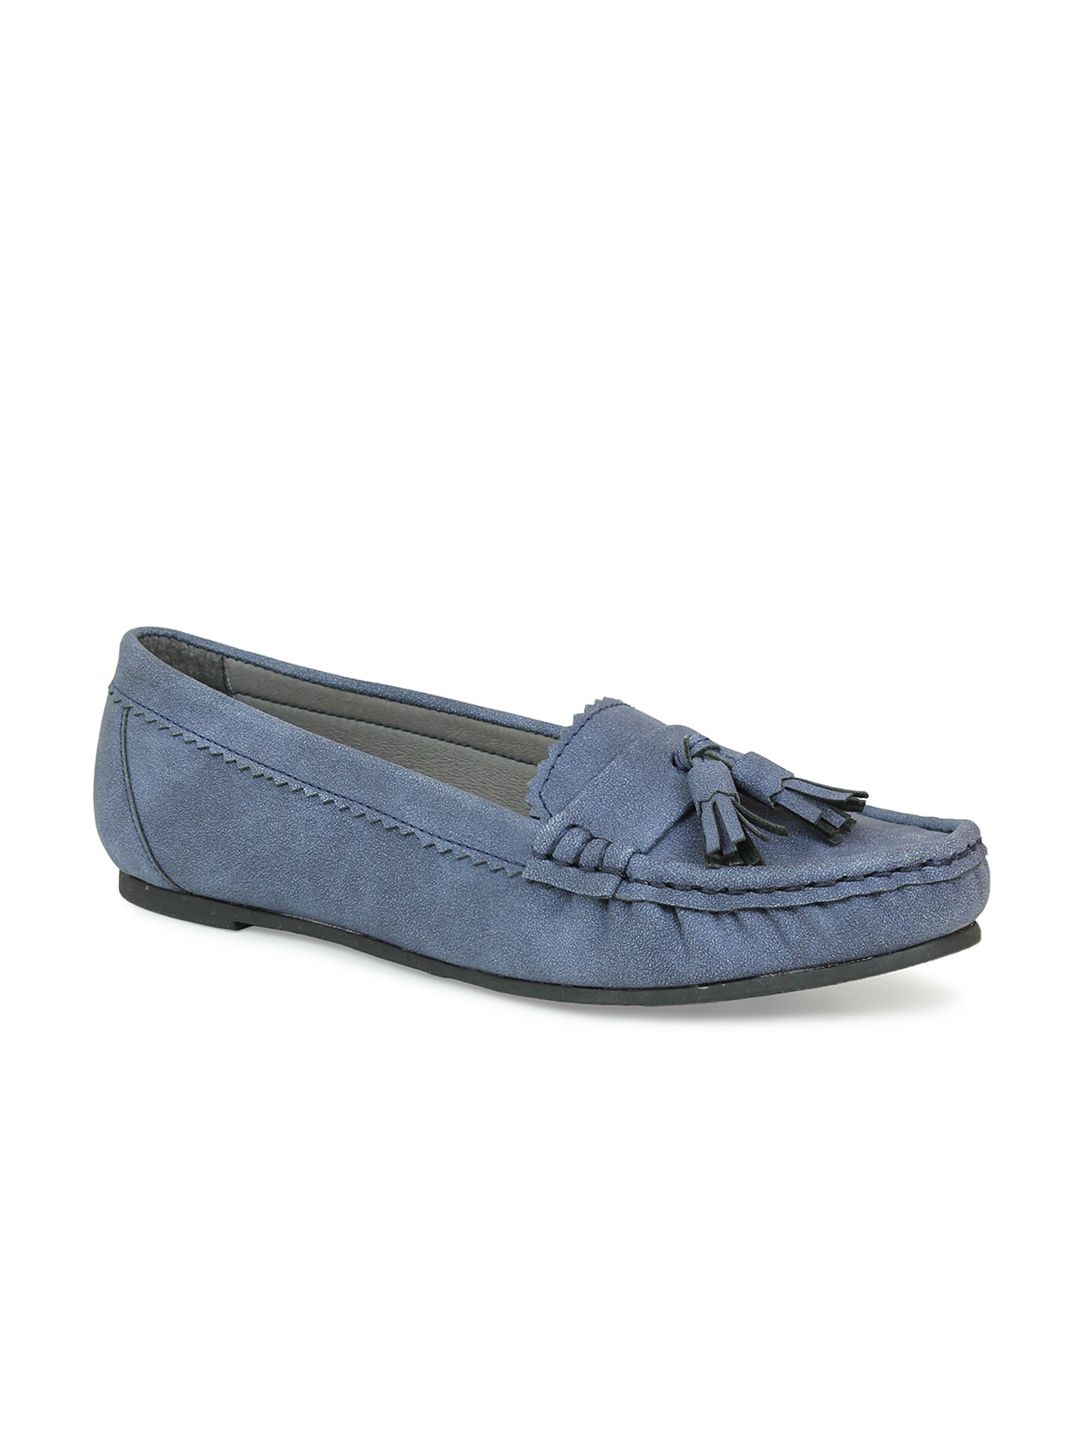 DESIGN CREW Women Blue Loafers Price in India